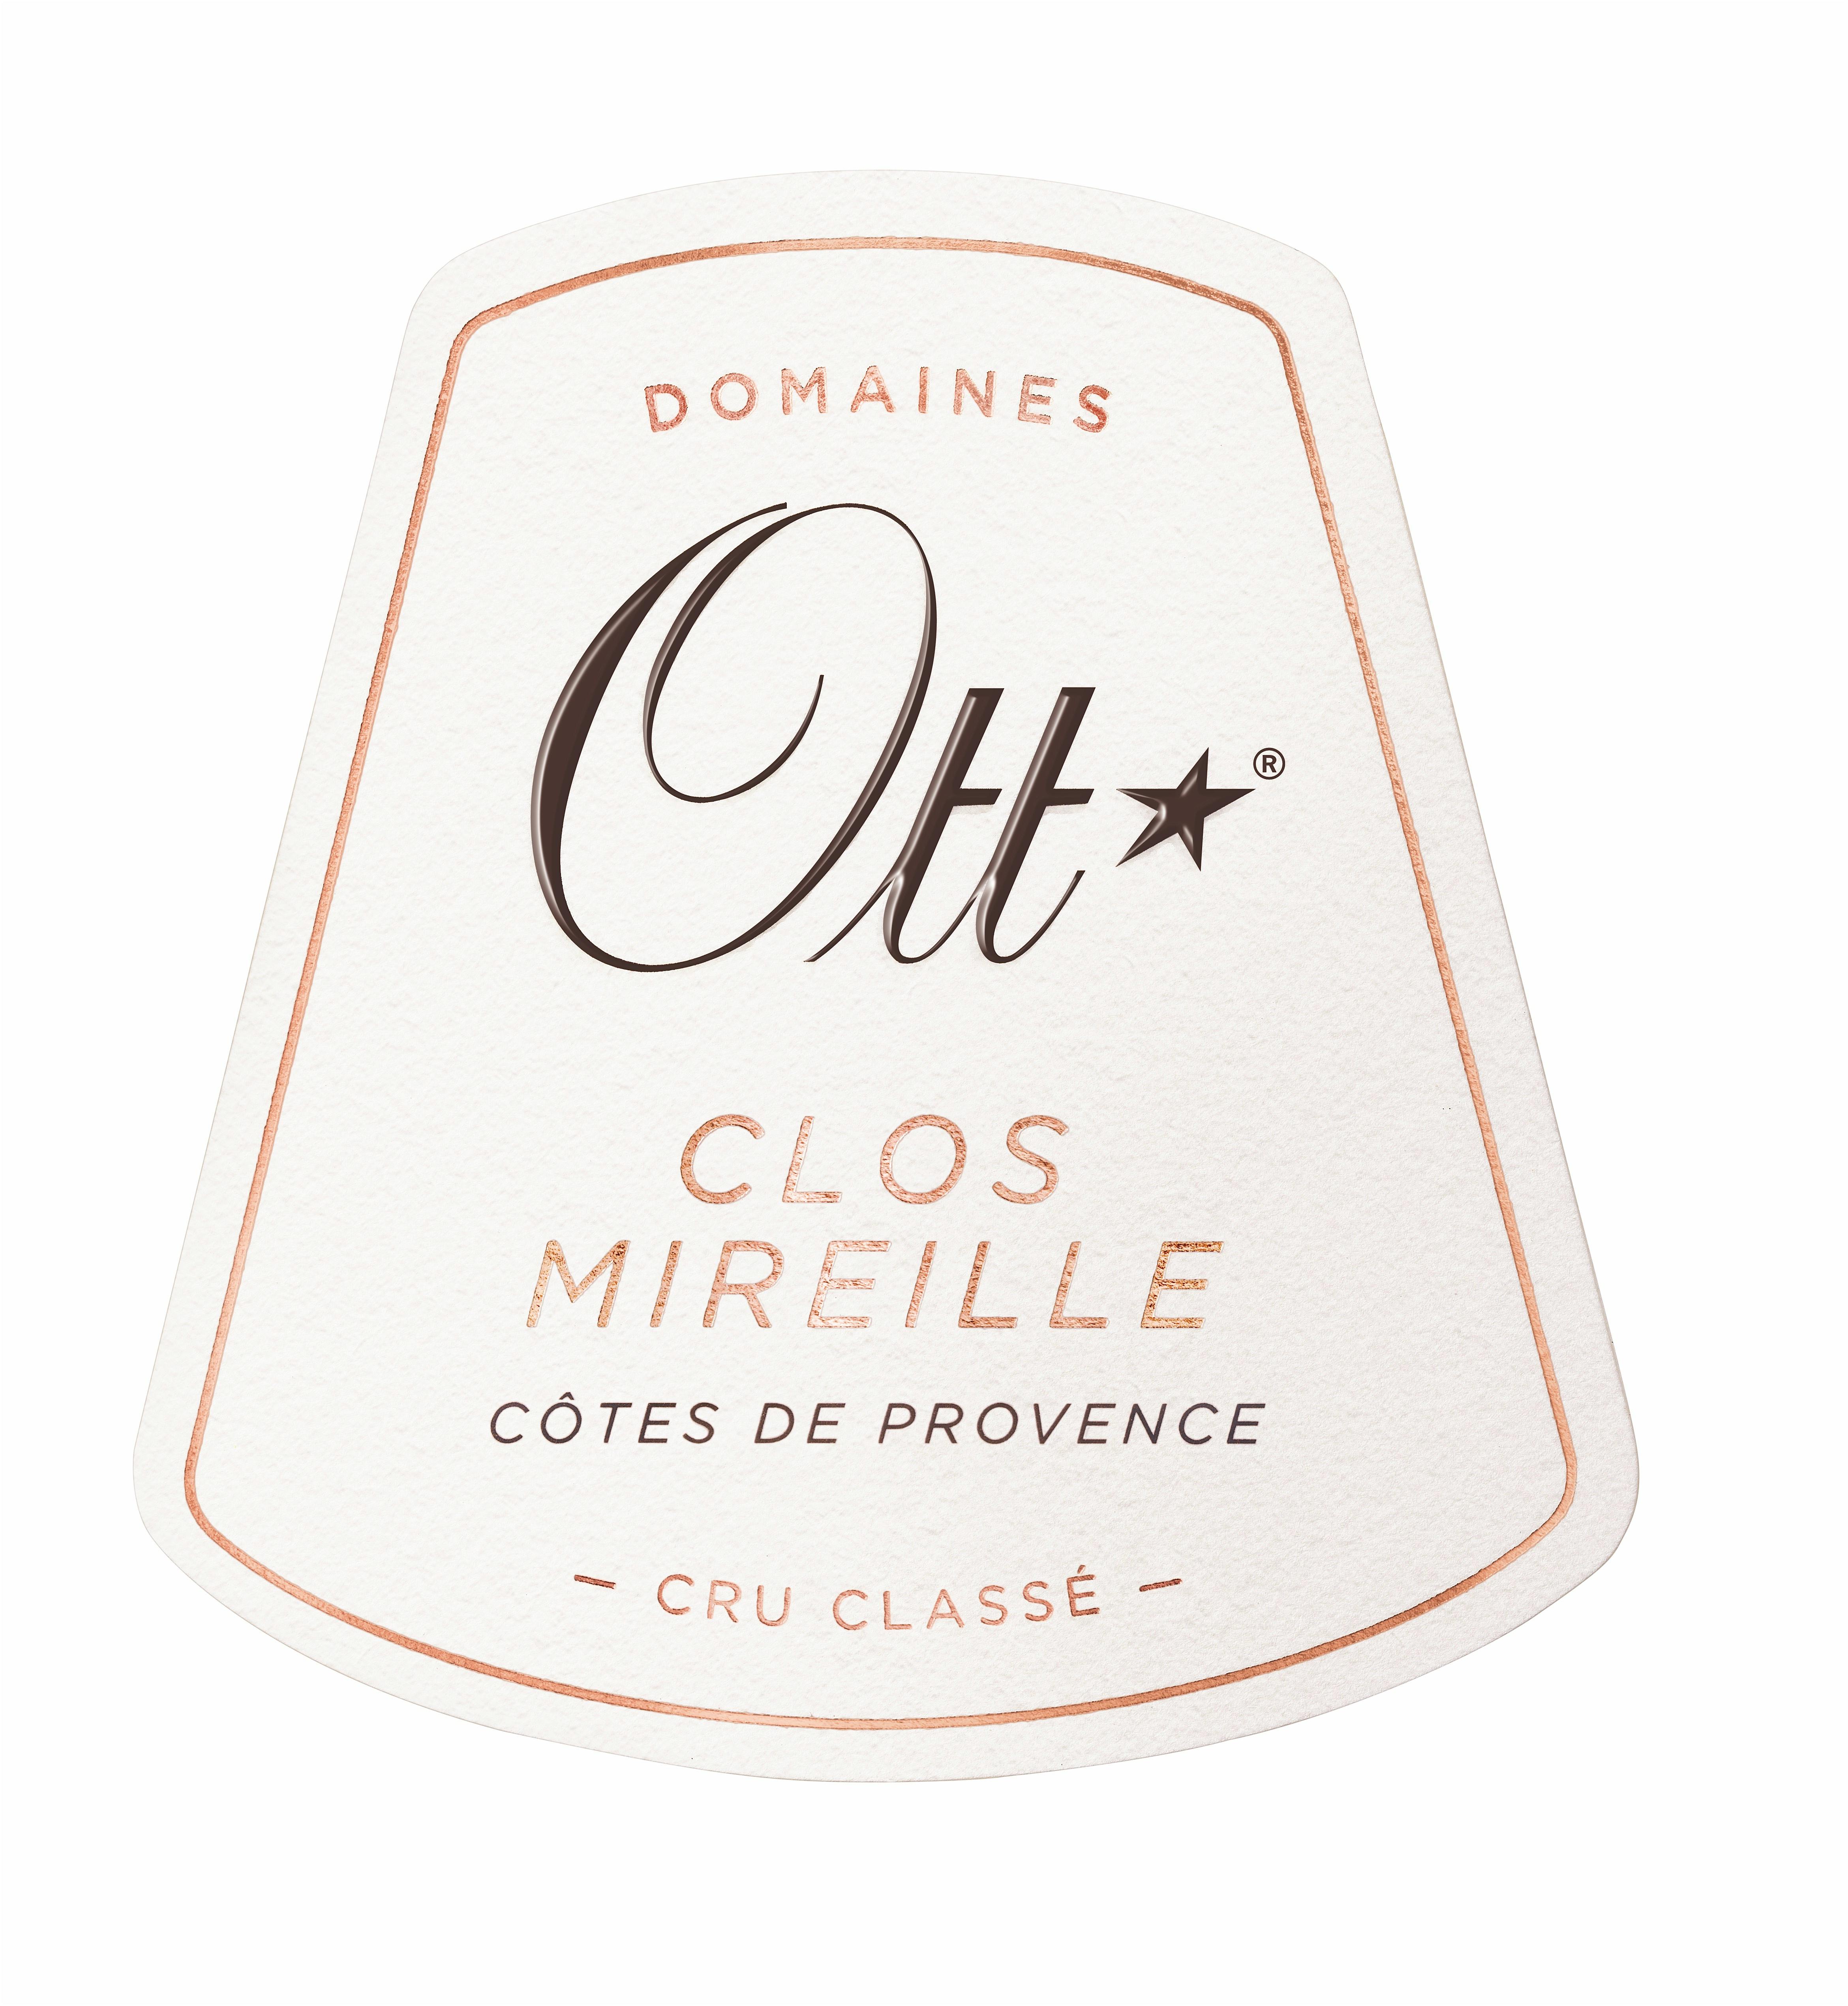 Label for Domaines Ott